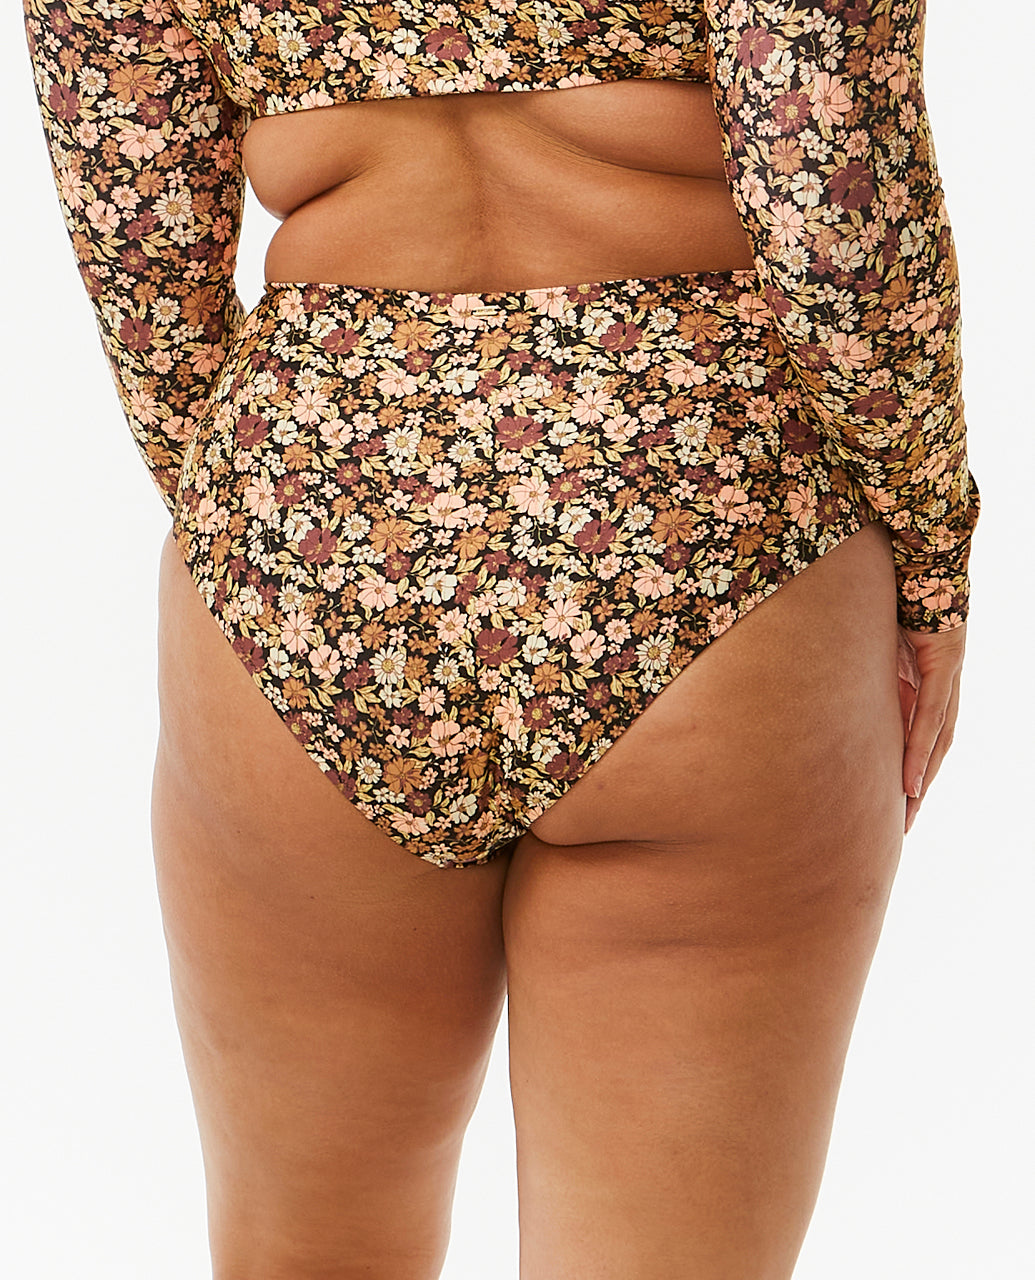 Ladies SEA OF DREAMS HI GOOD PANT Bikini Set Bottom